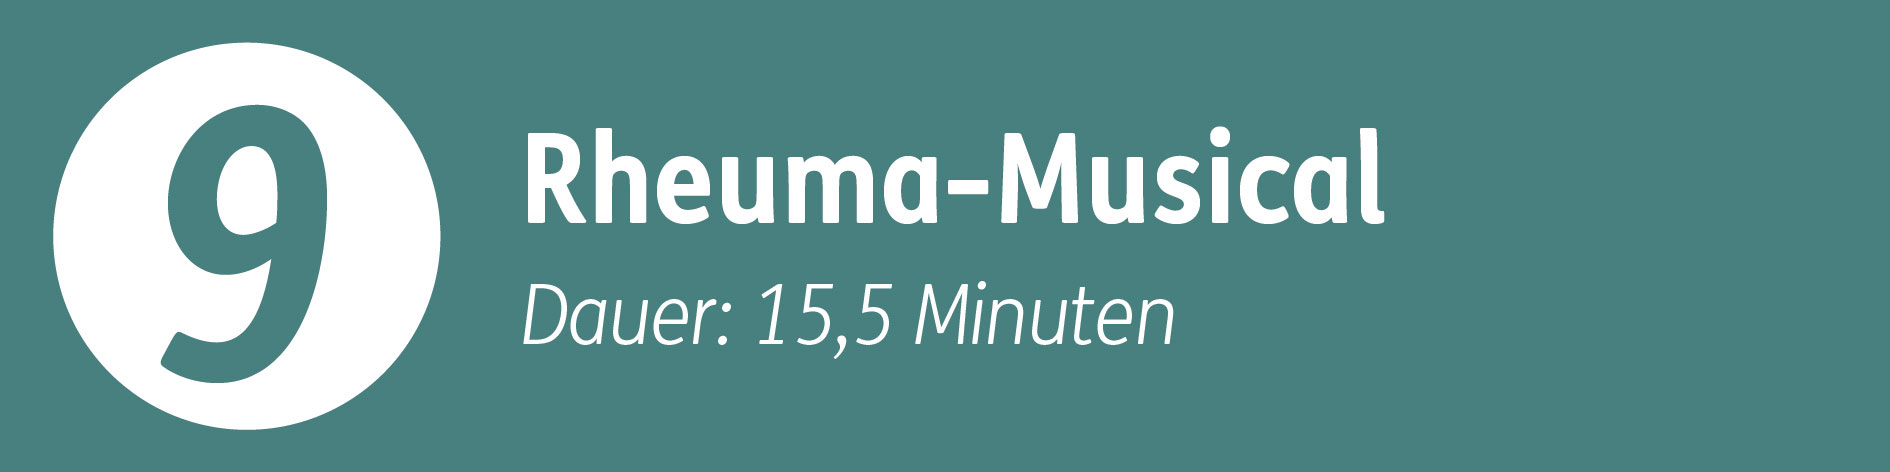 Standort 9 - Rheuma-Musical